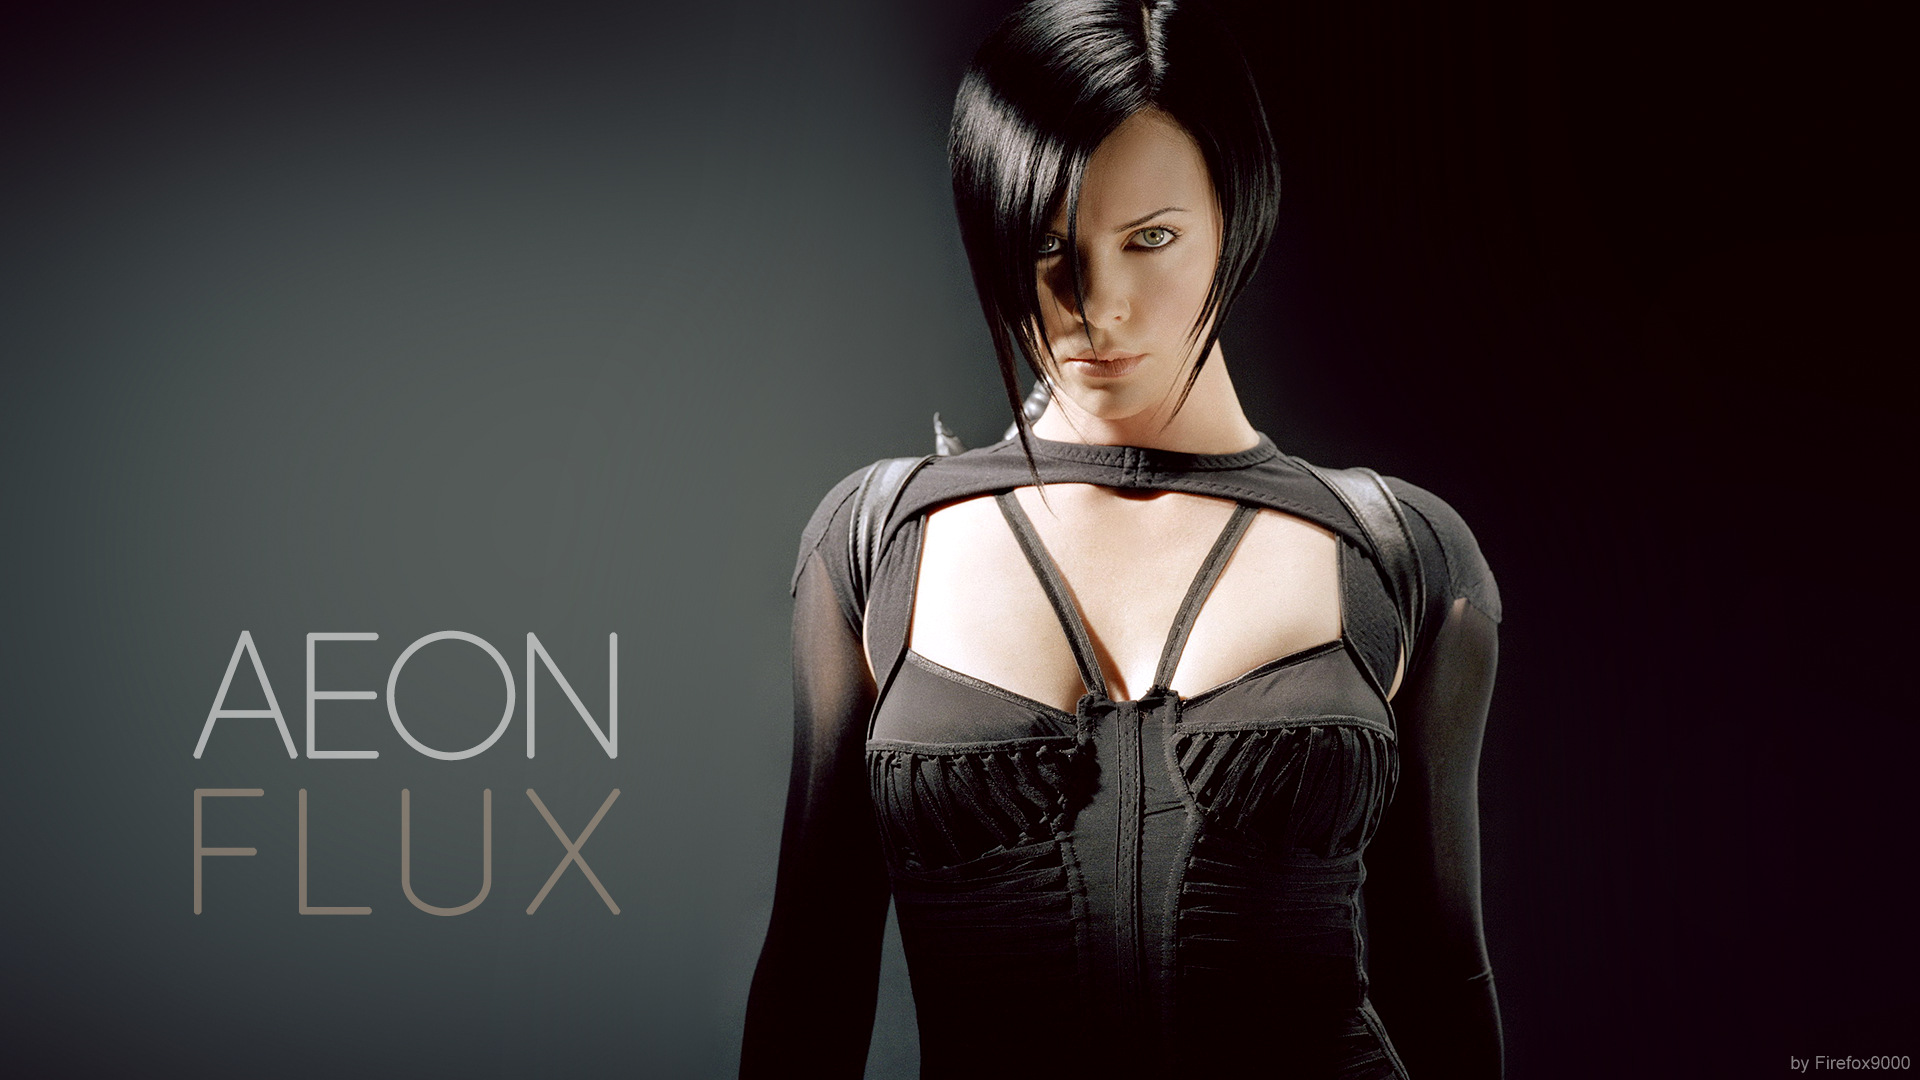 People 1920x1080 Aeon Flux Charlize Theron 2005 (Year) movies dark hair women short hair black hair actress